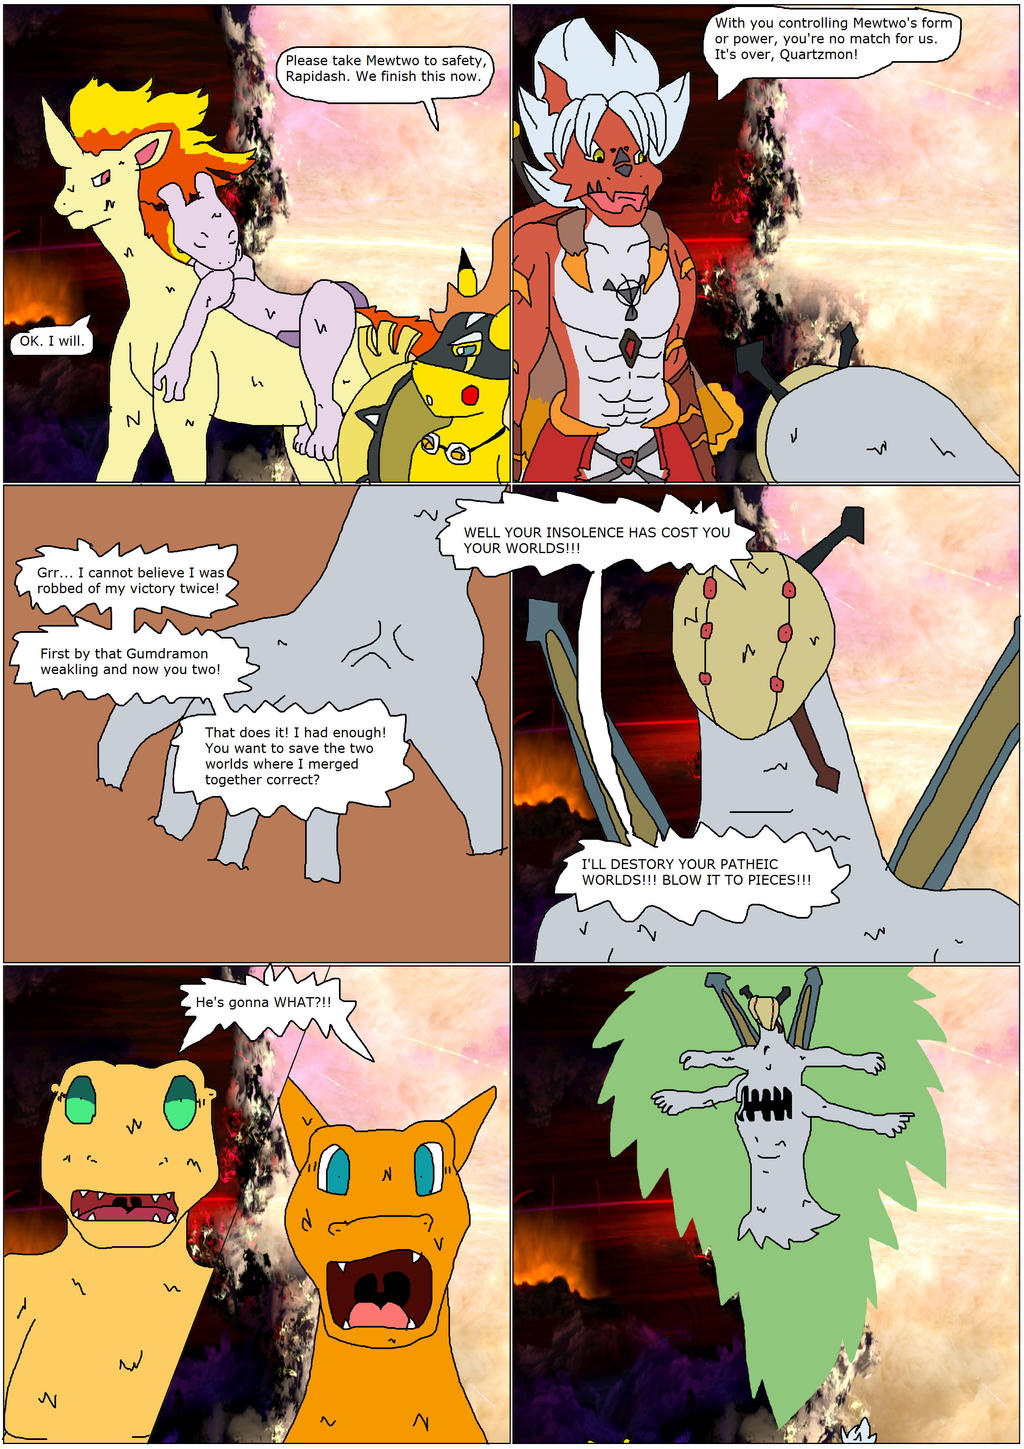 Dawn's pokemon team (Pokemonxdigimon story) by kamuiprime on DeviantArt